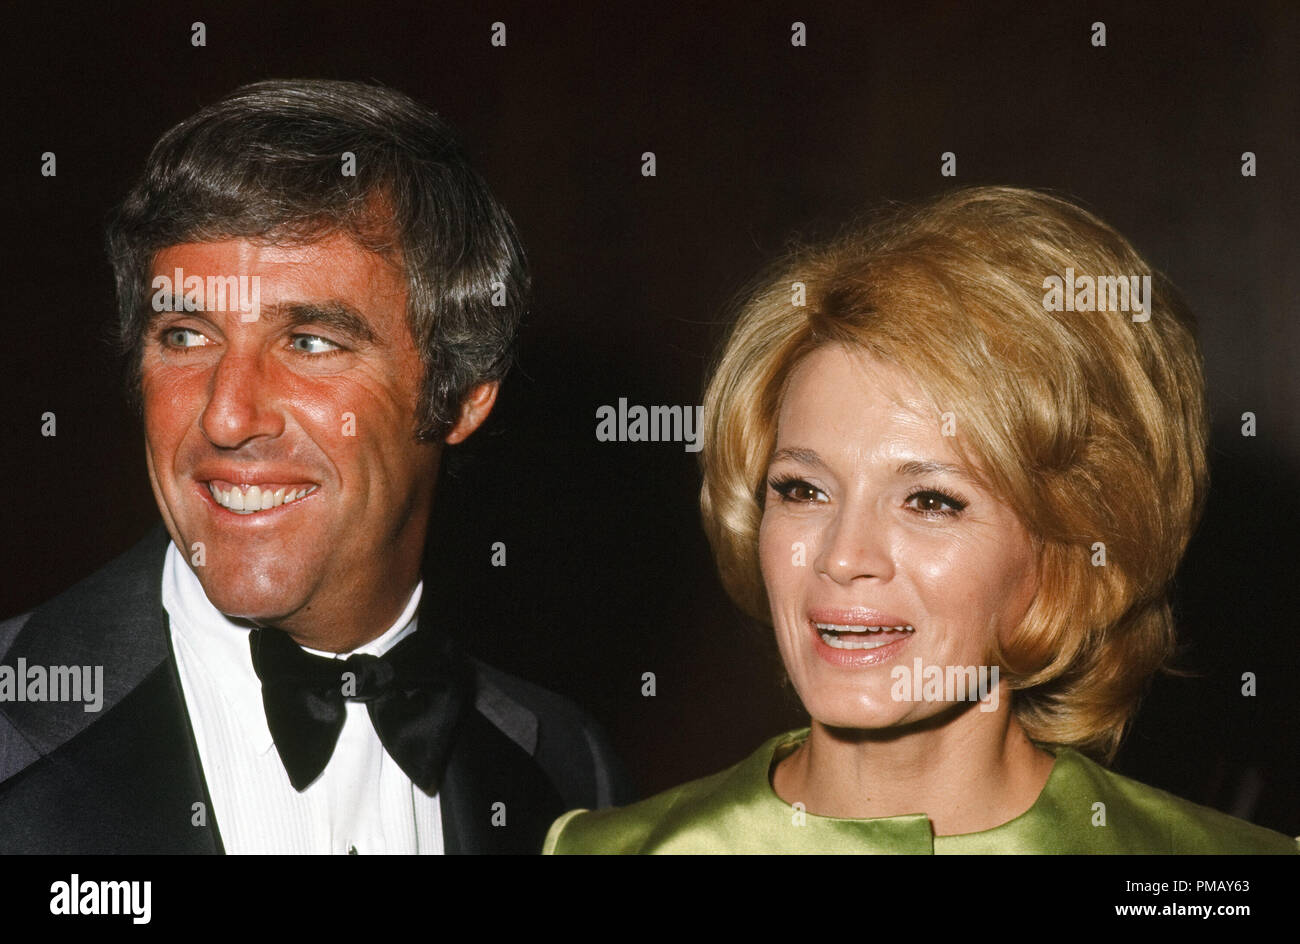 Burt Bacharach und Frau Angie Dickinson, circa 1970 Datei Referenz # 325557 055 THA Stockfoto